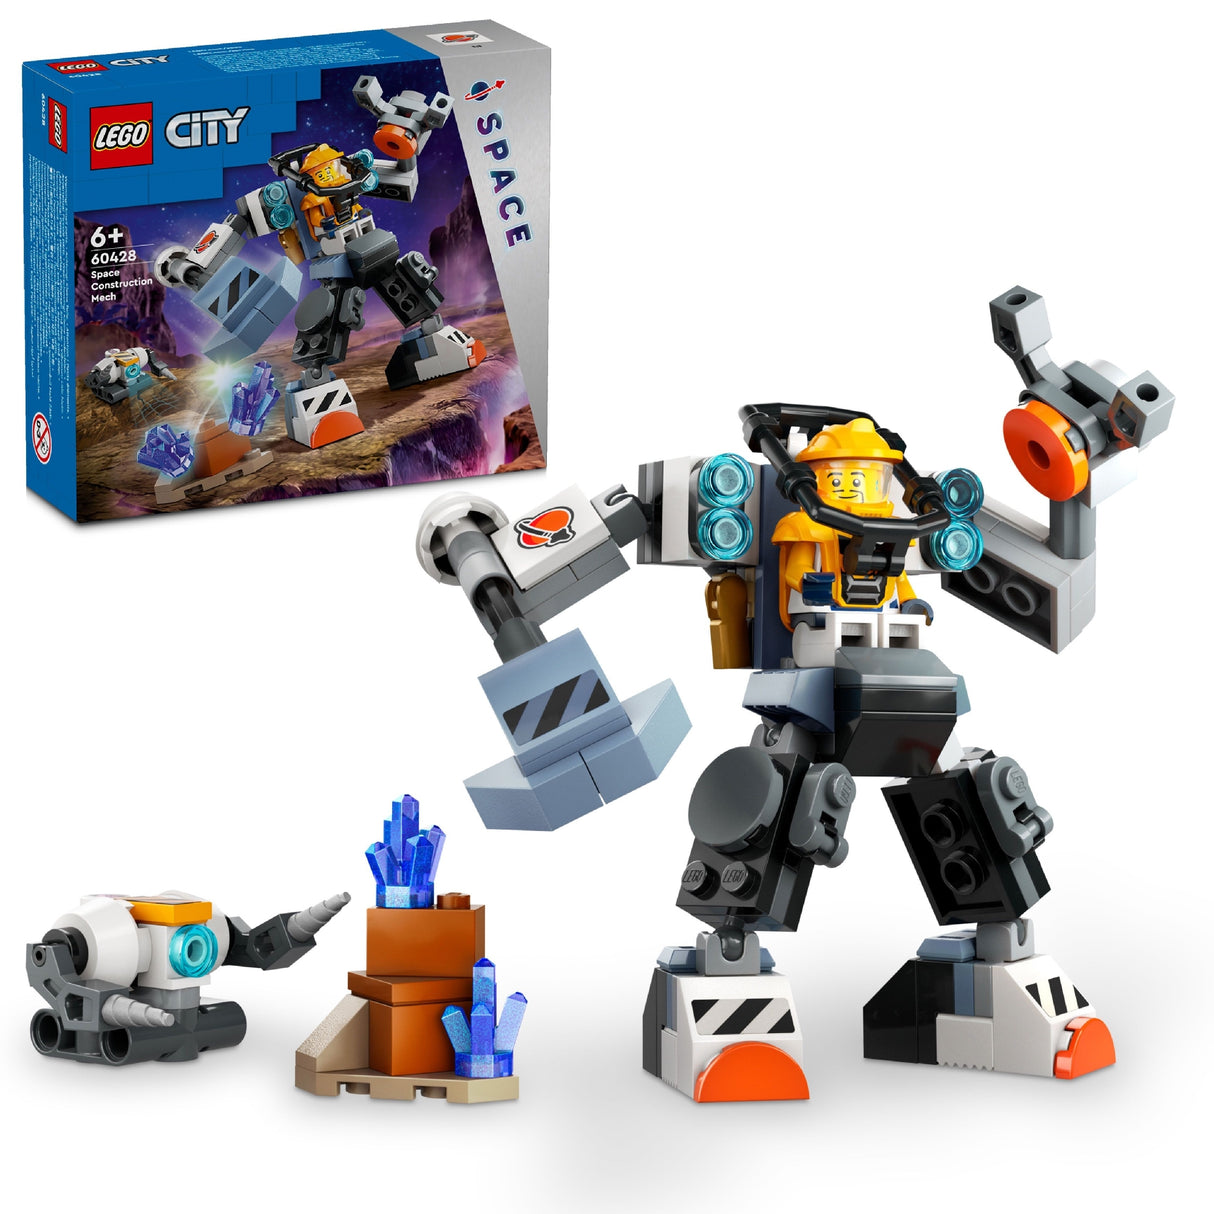 LEGO CITY SPACE CONSTUCTION MECH 60428 AGE: 6+